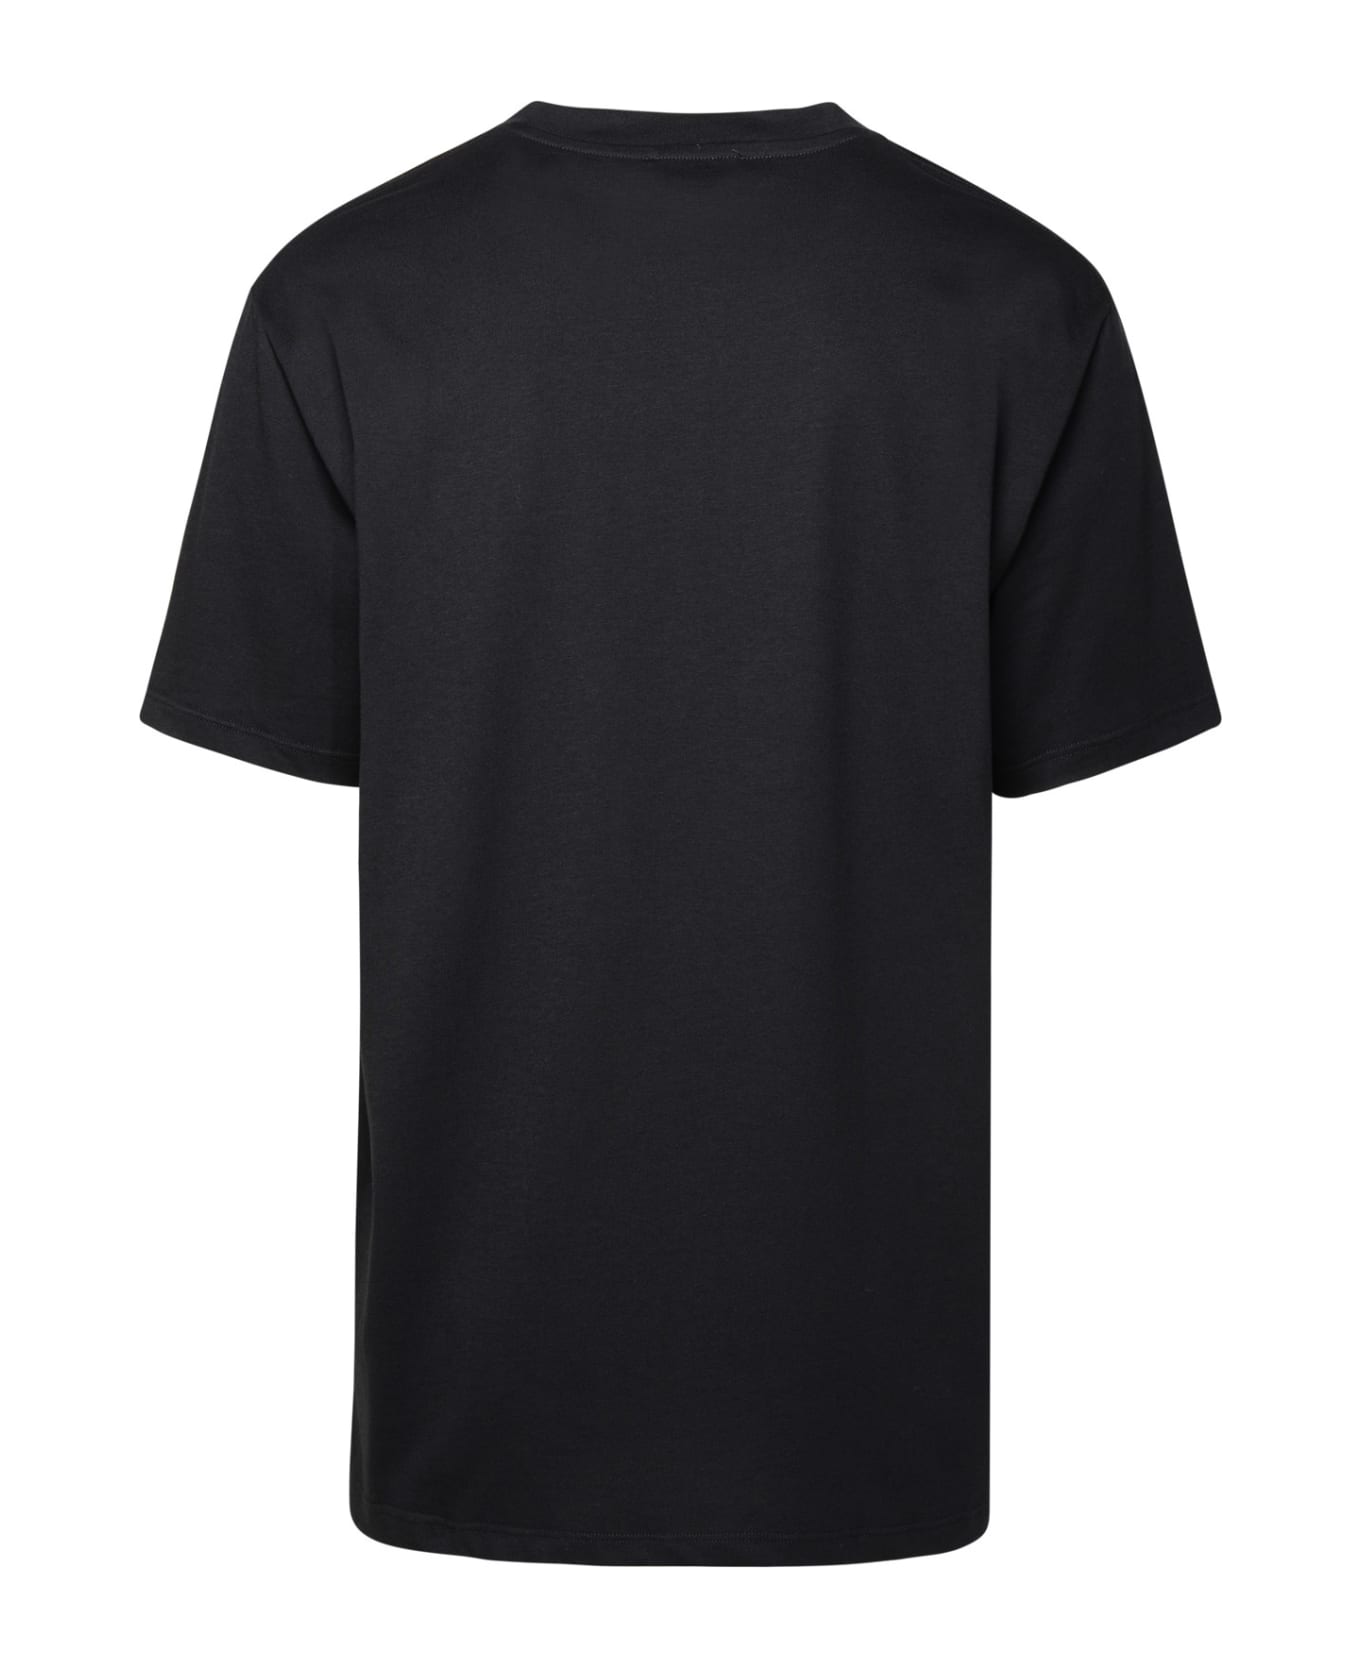 Balmain T-shirt - black